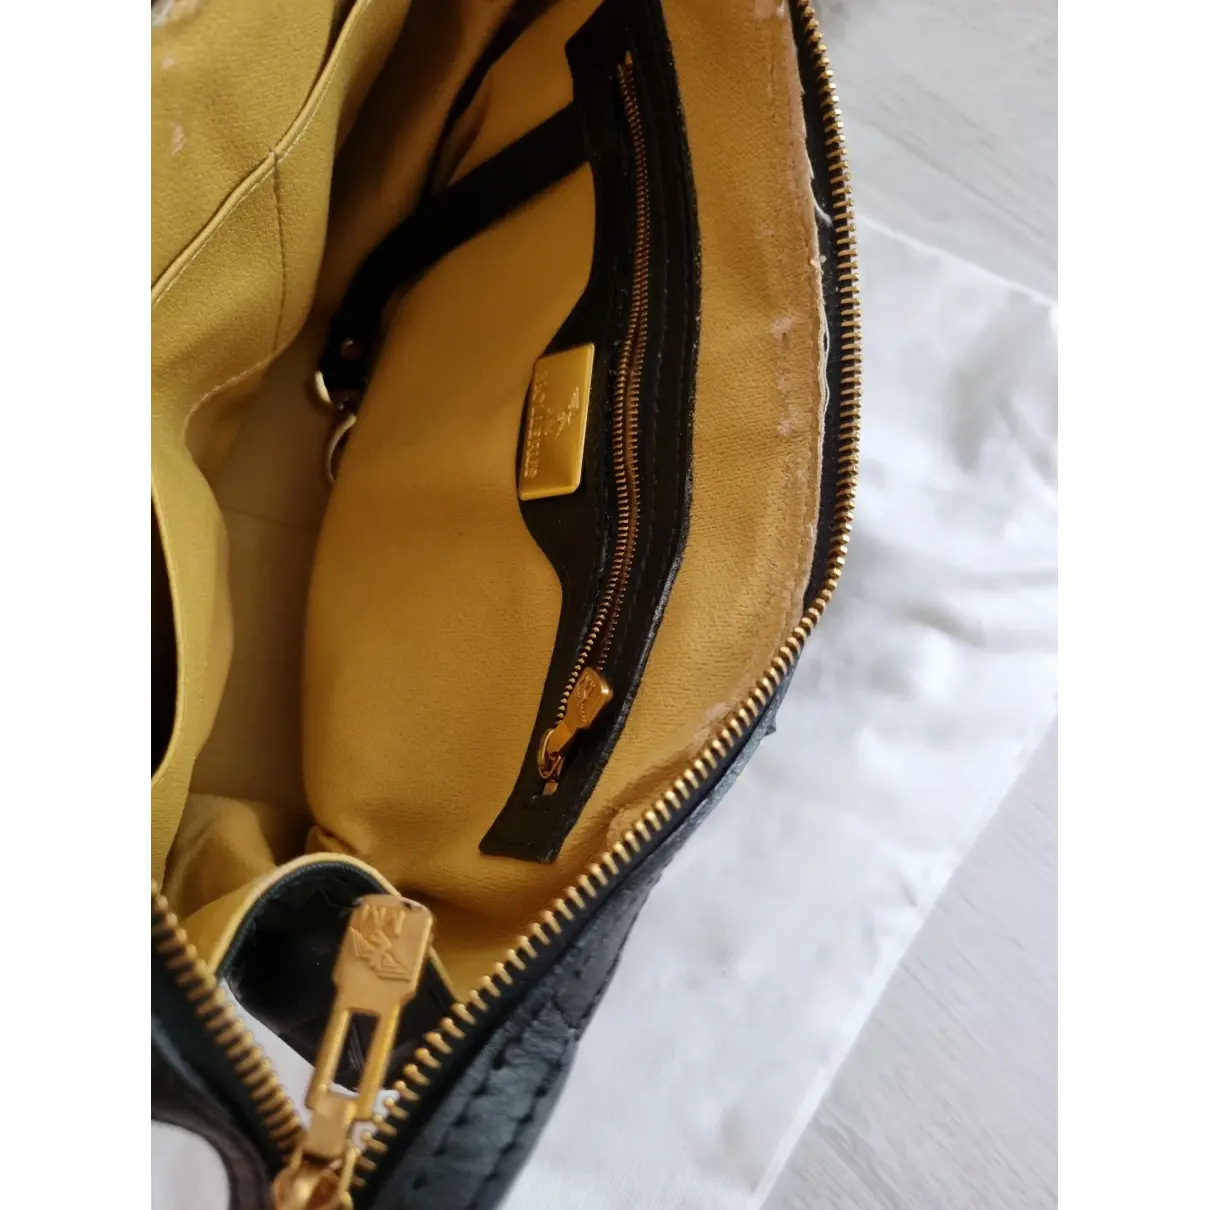 Vegan leather handbag Mollerus